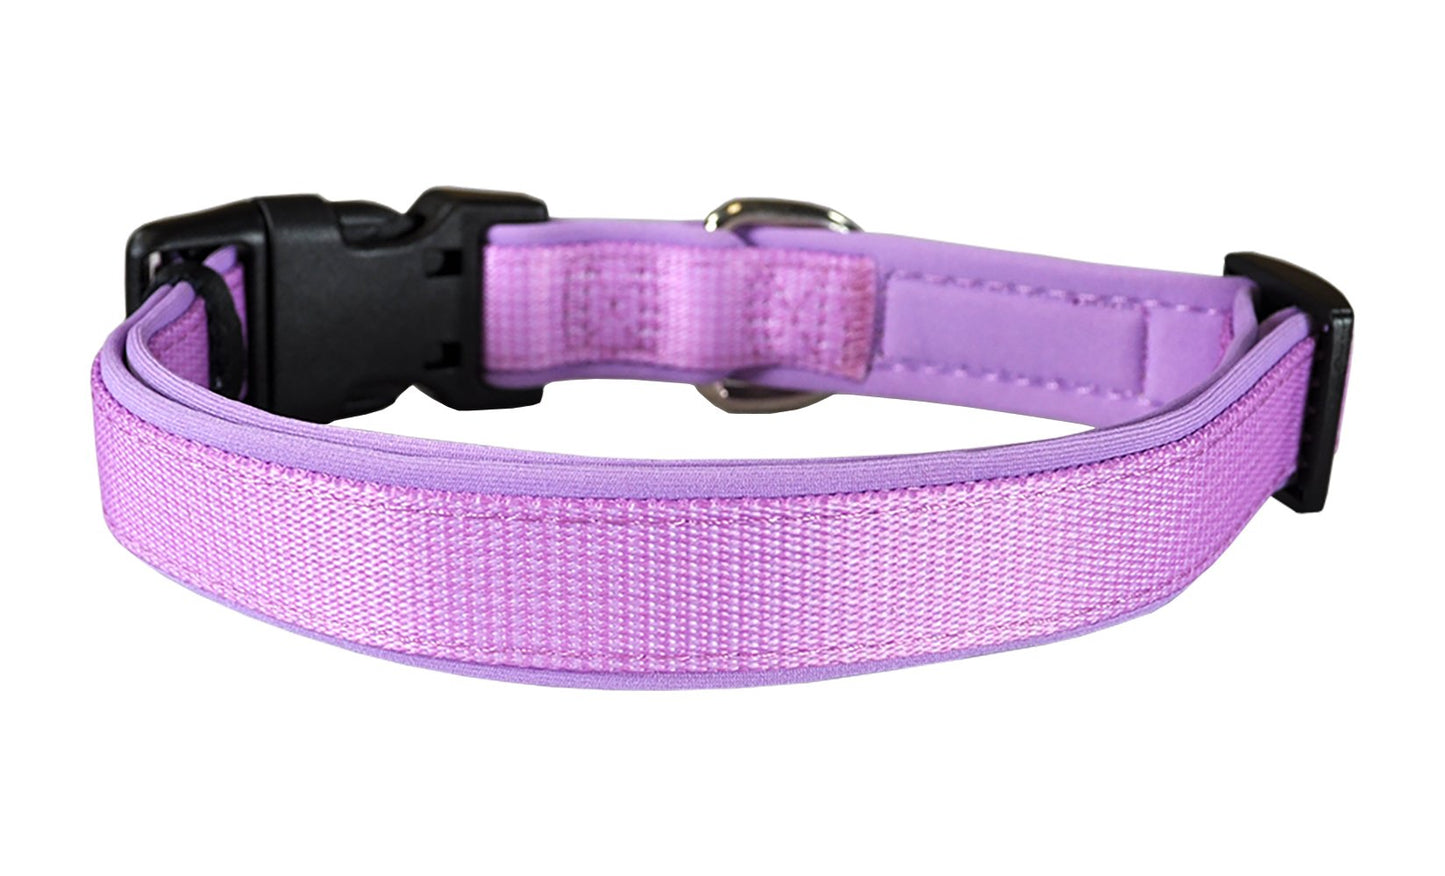 Adjustable Designer Dog Collar - Multi-Size and Color Options